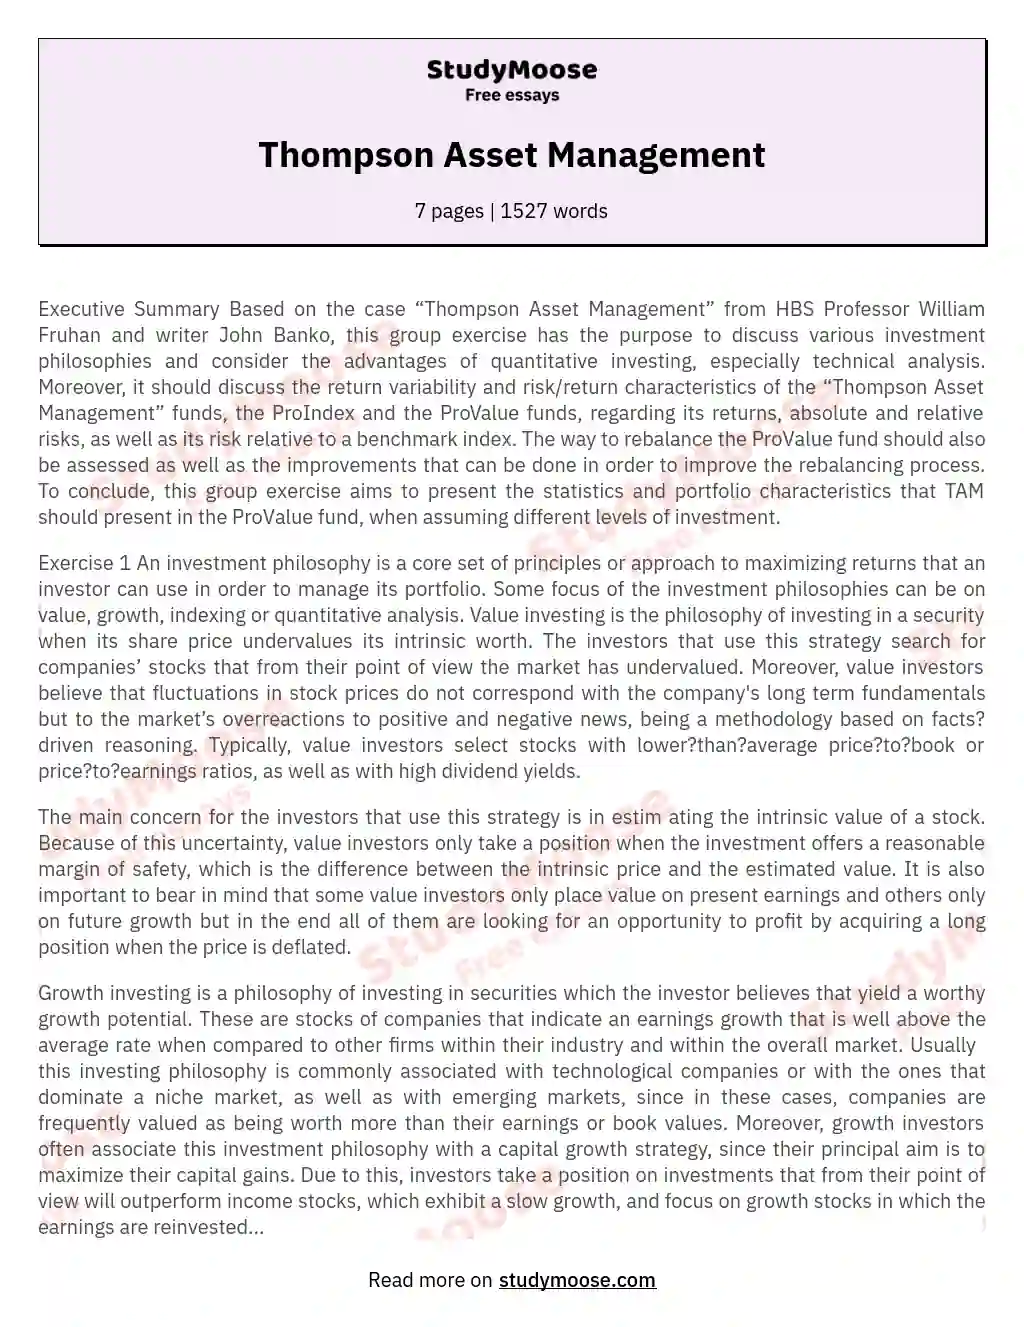 Thompson Asset Management essay